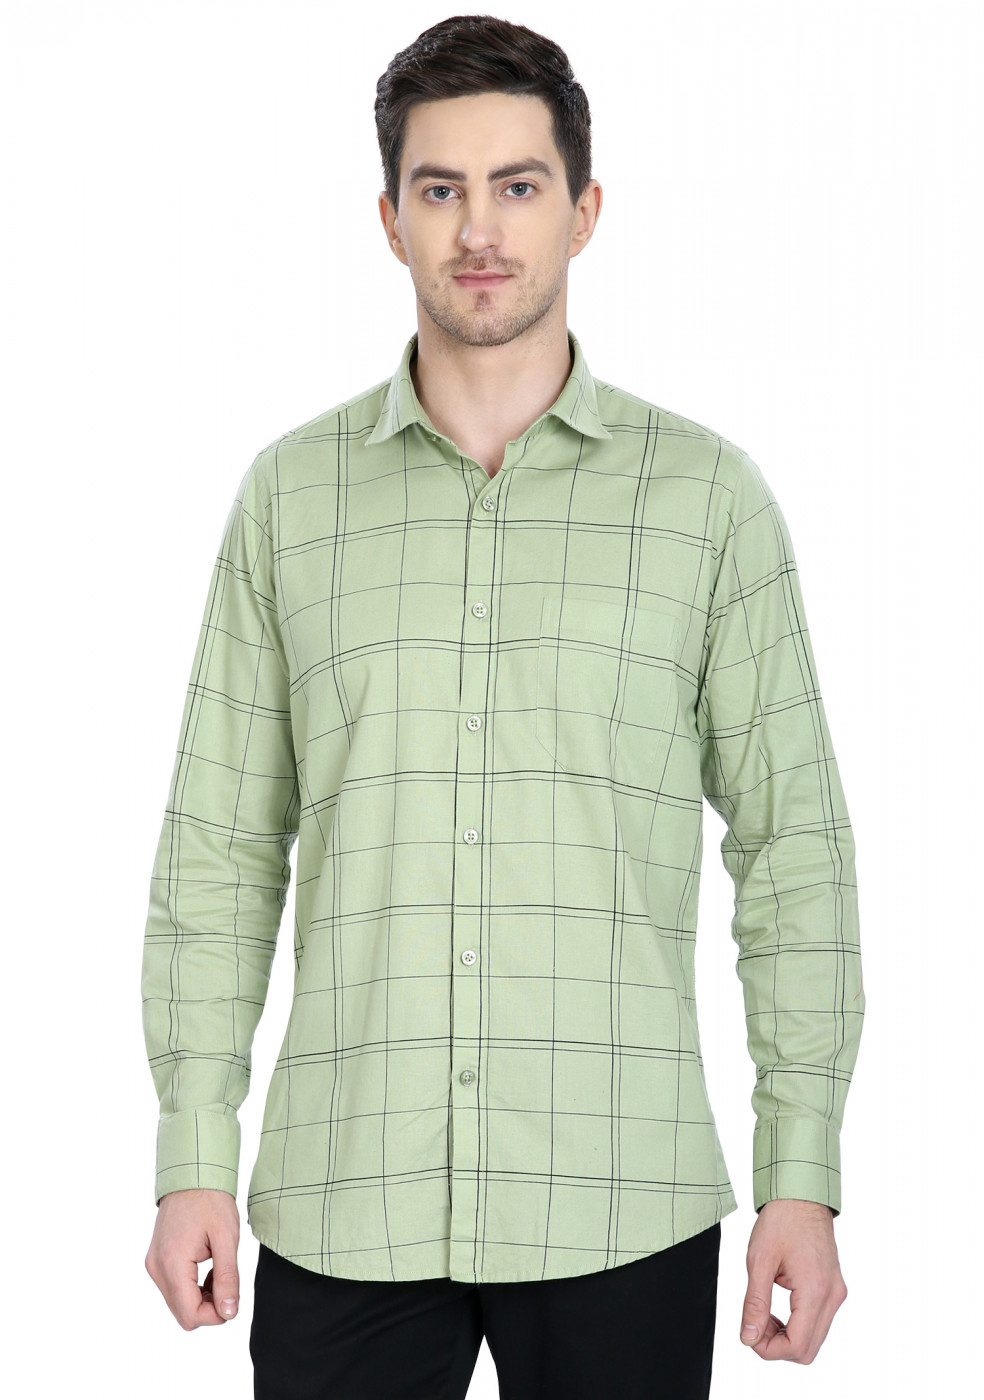 Light Green Color Big Check Cotton Shirt For Men